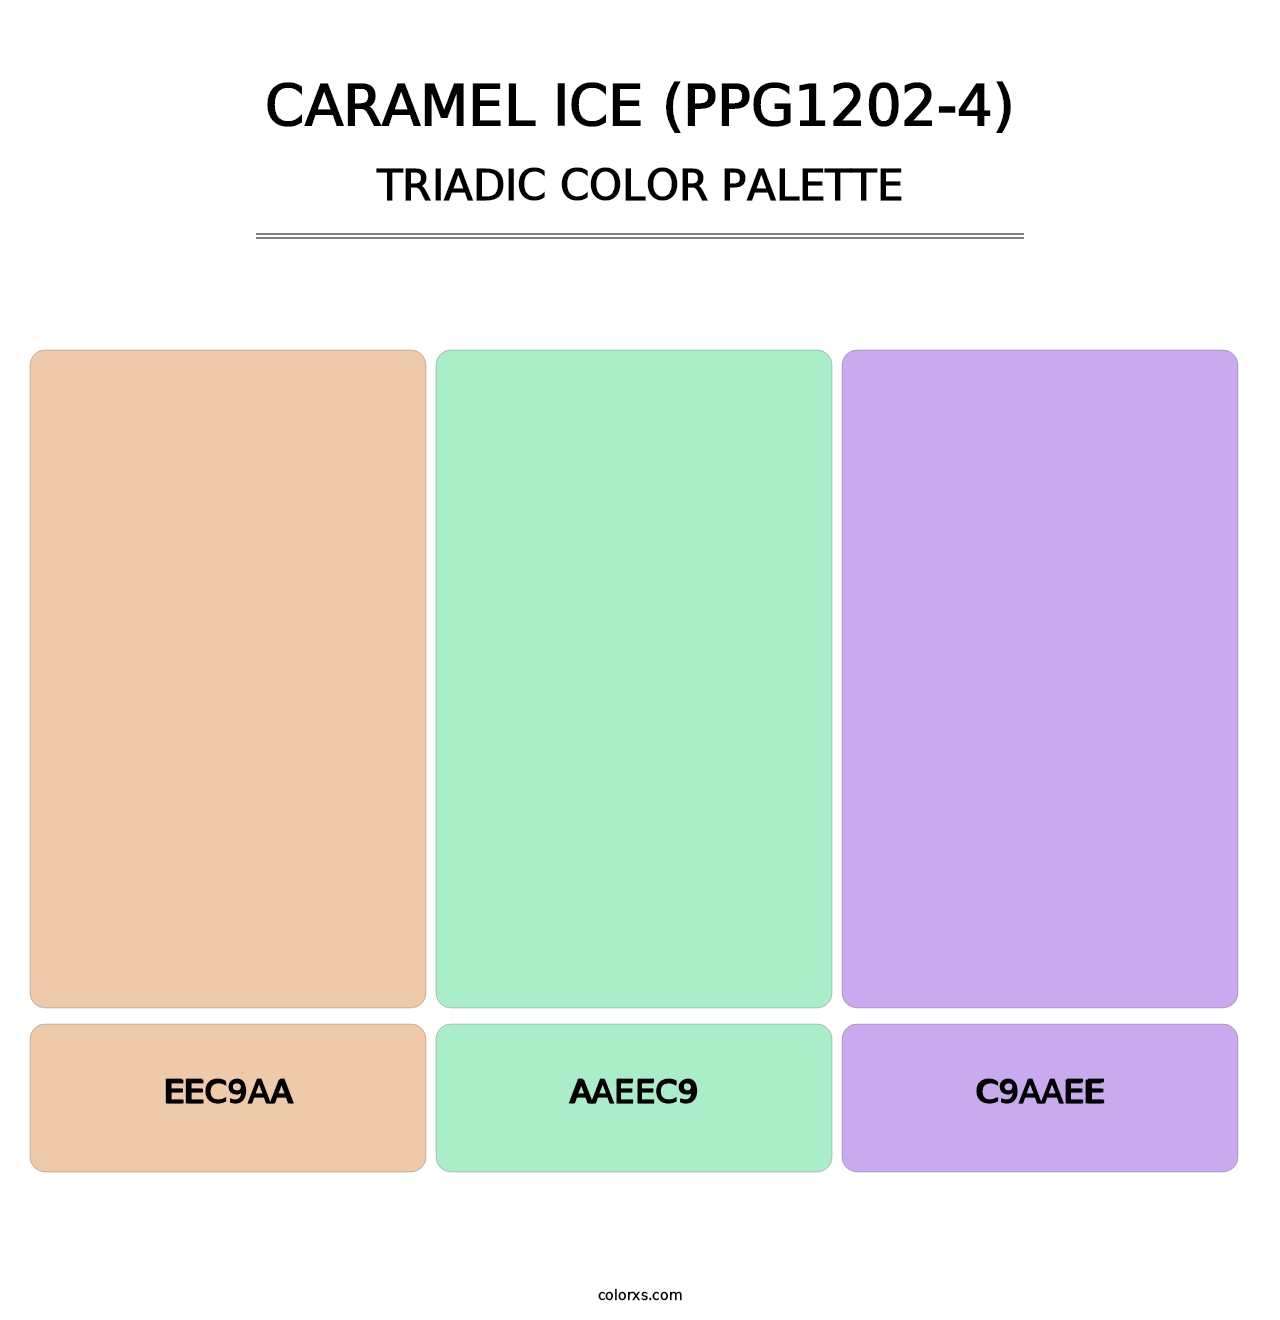 Caramel Ice (PPG1202-4) - Triadic Color Palette